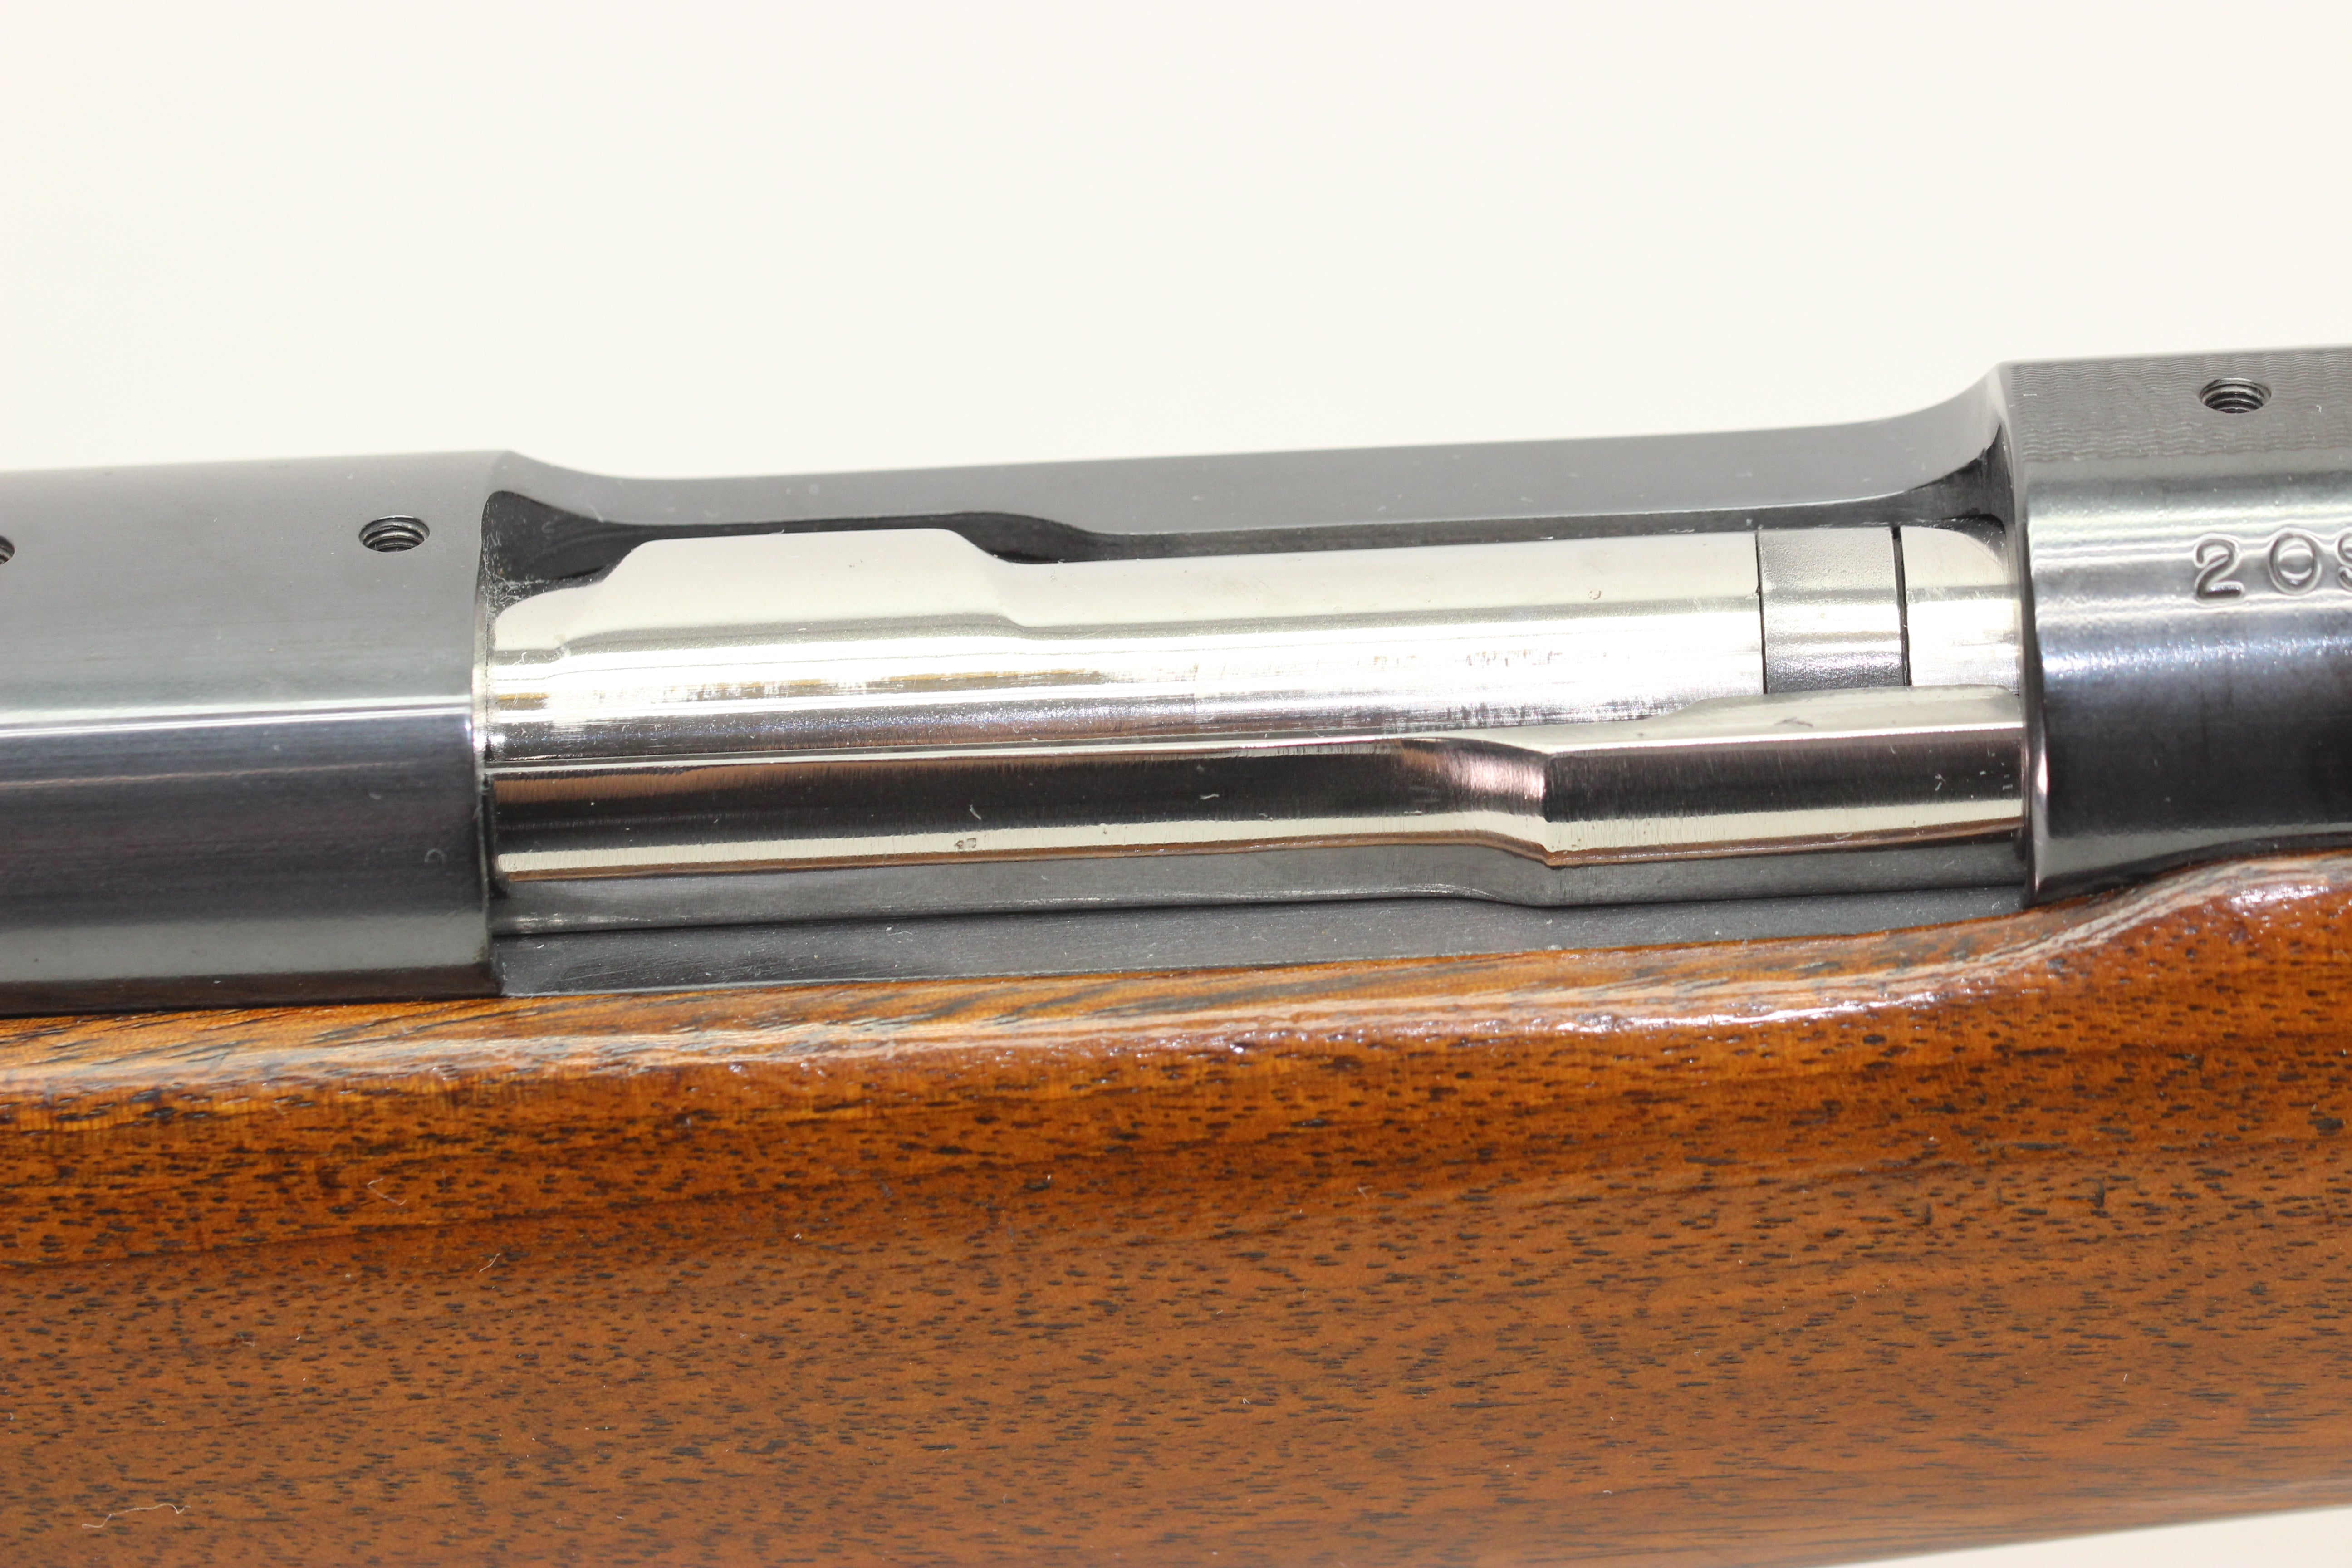 .270 Win Standard Rifle - 1952